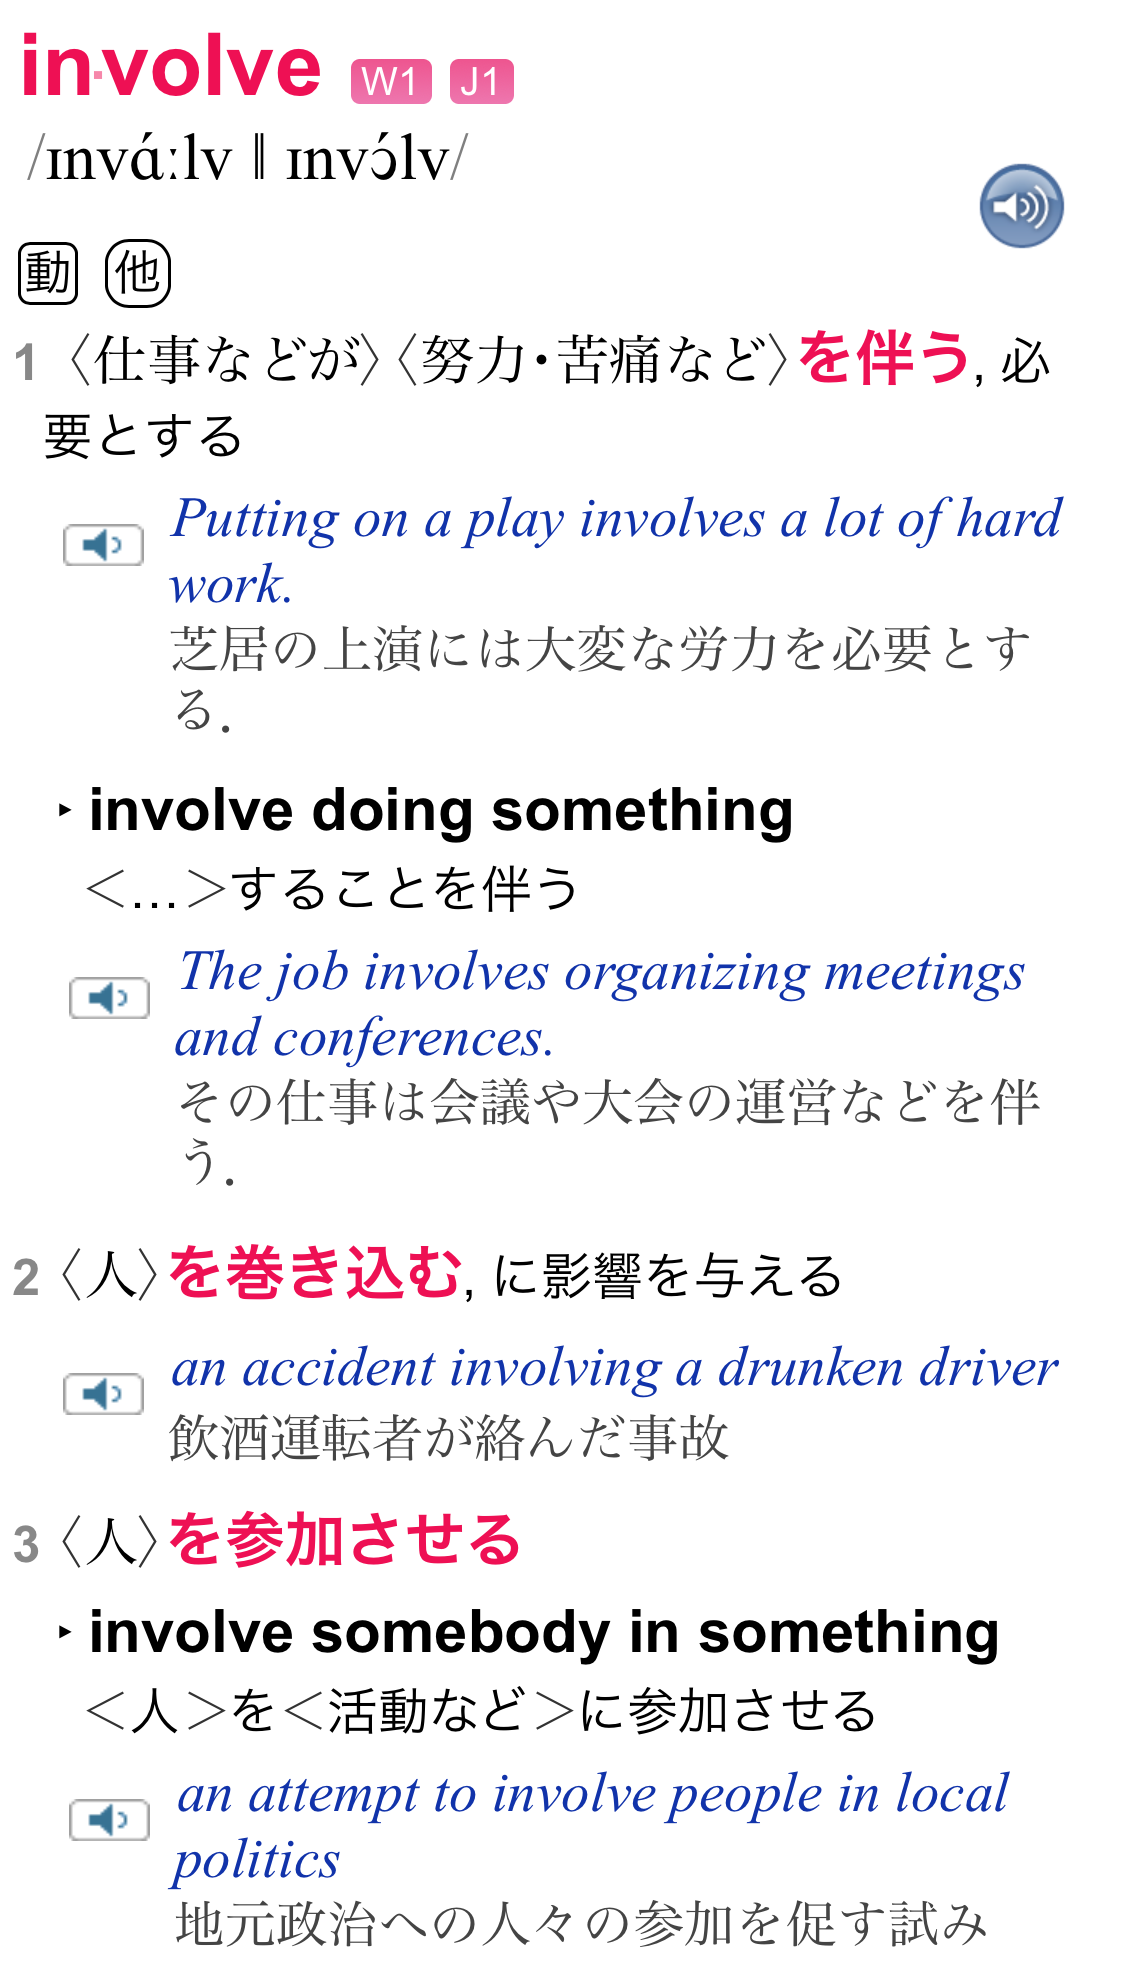 longman english japanese dictionary involve